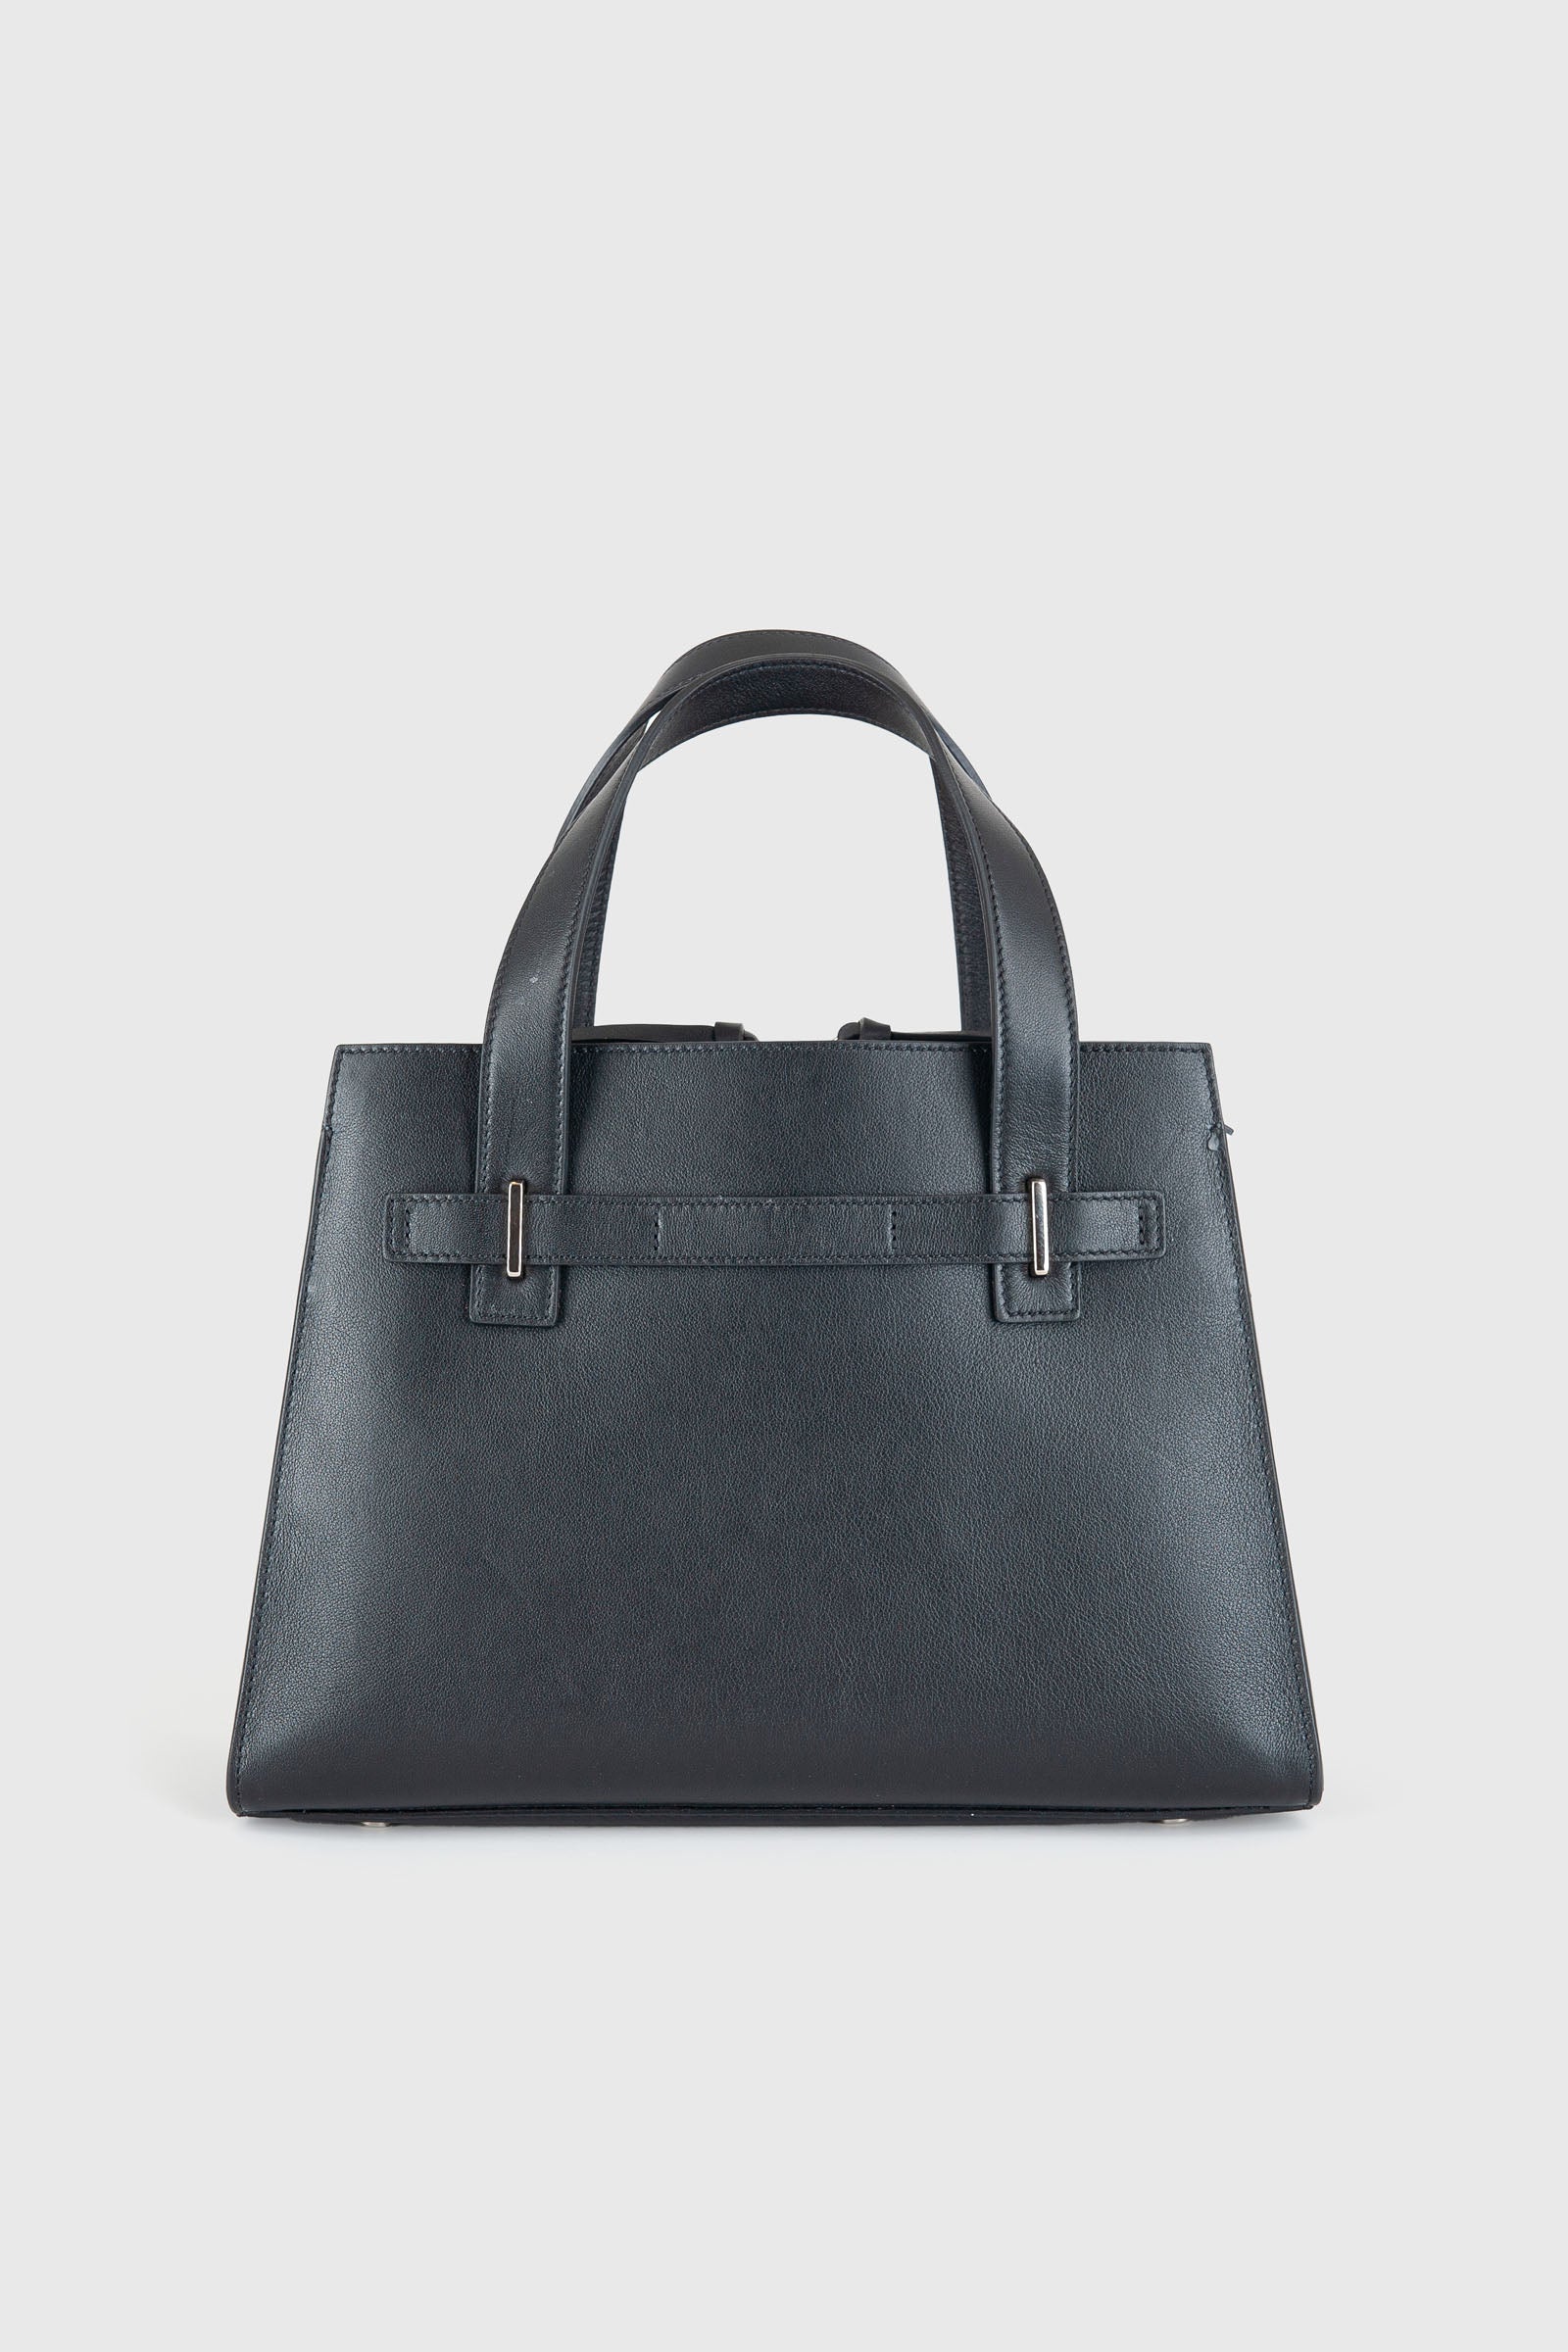 Orciani Leather Bag Black Out Black Woman B02147BLACK - 3